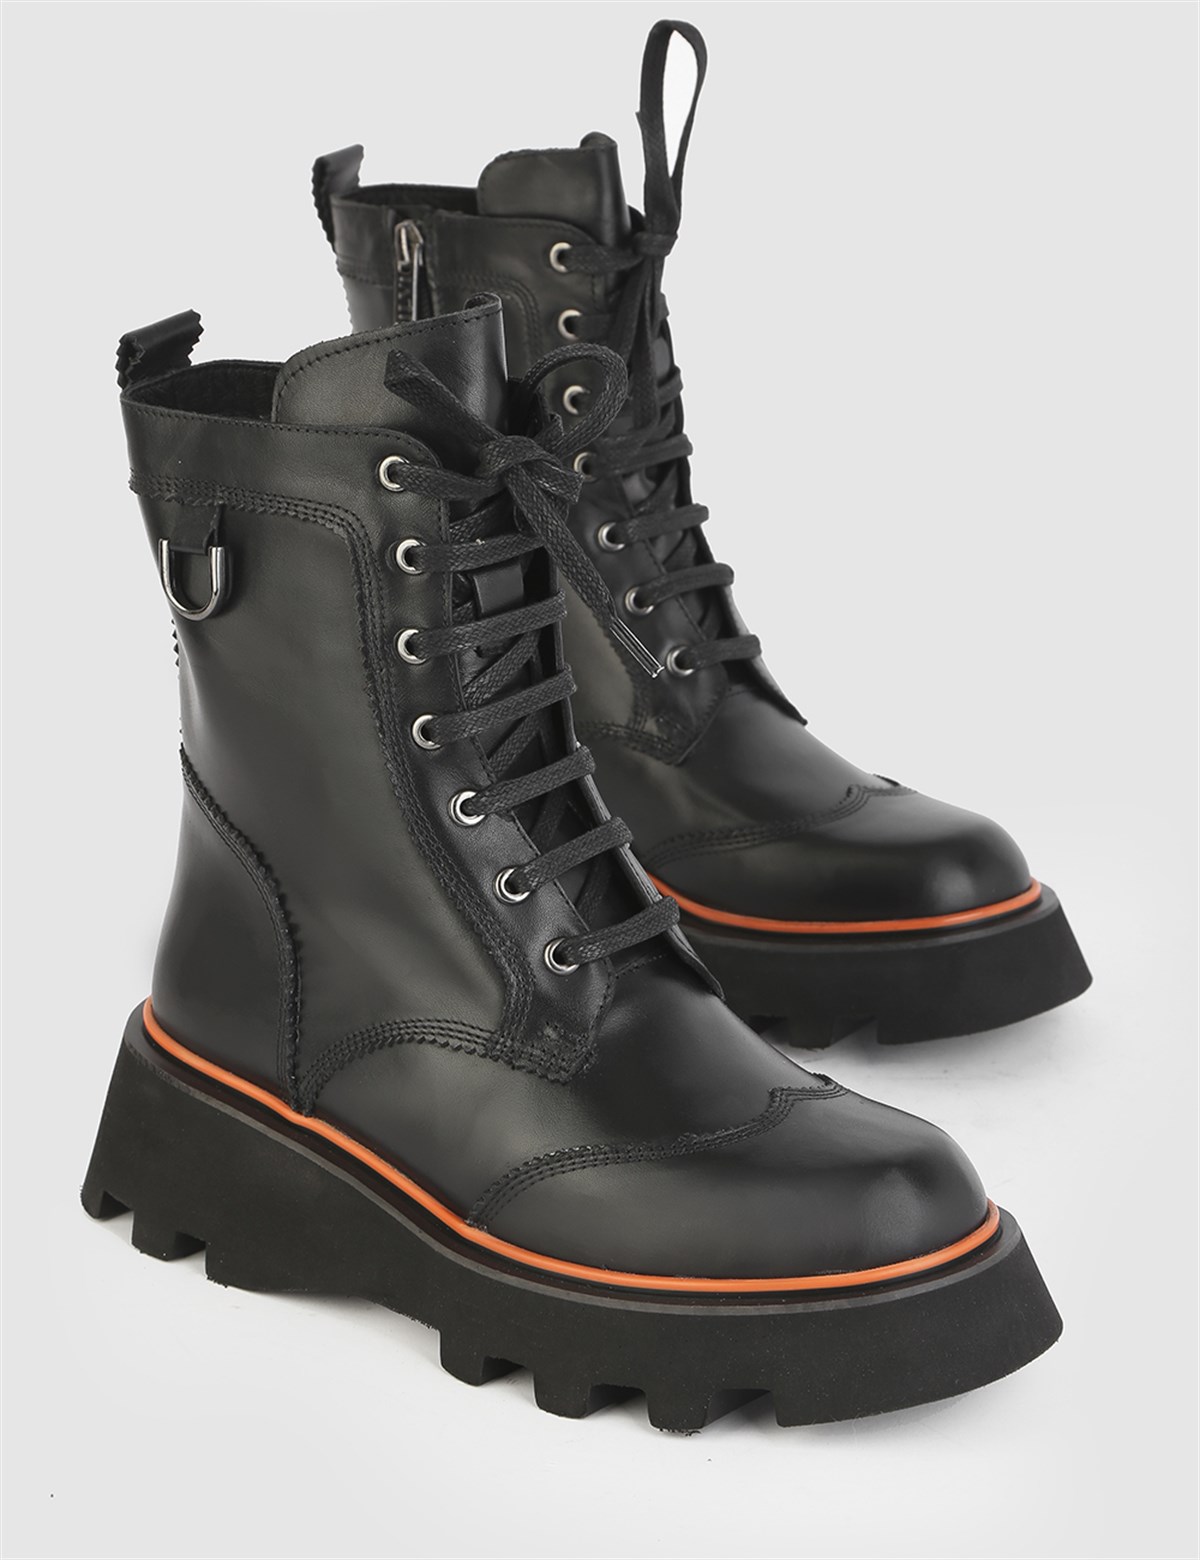 Barry Black Leather Women's Boot - İLVİ